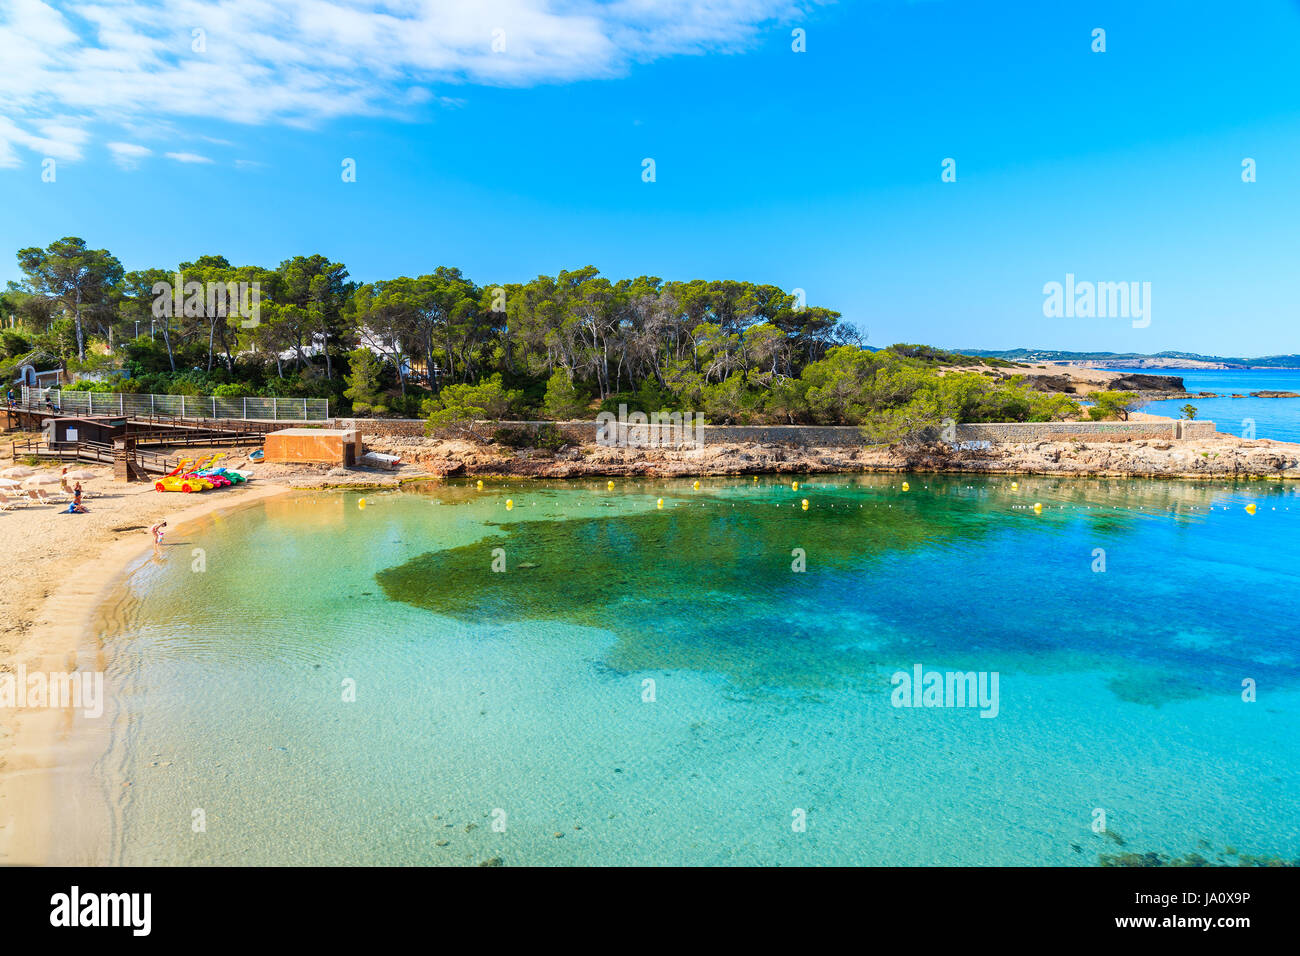 View of beautiful Cala Gracio beach at early morning, Ibiza island, Spain Stock Photo